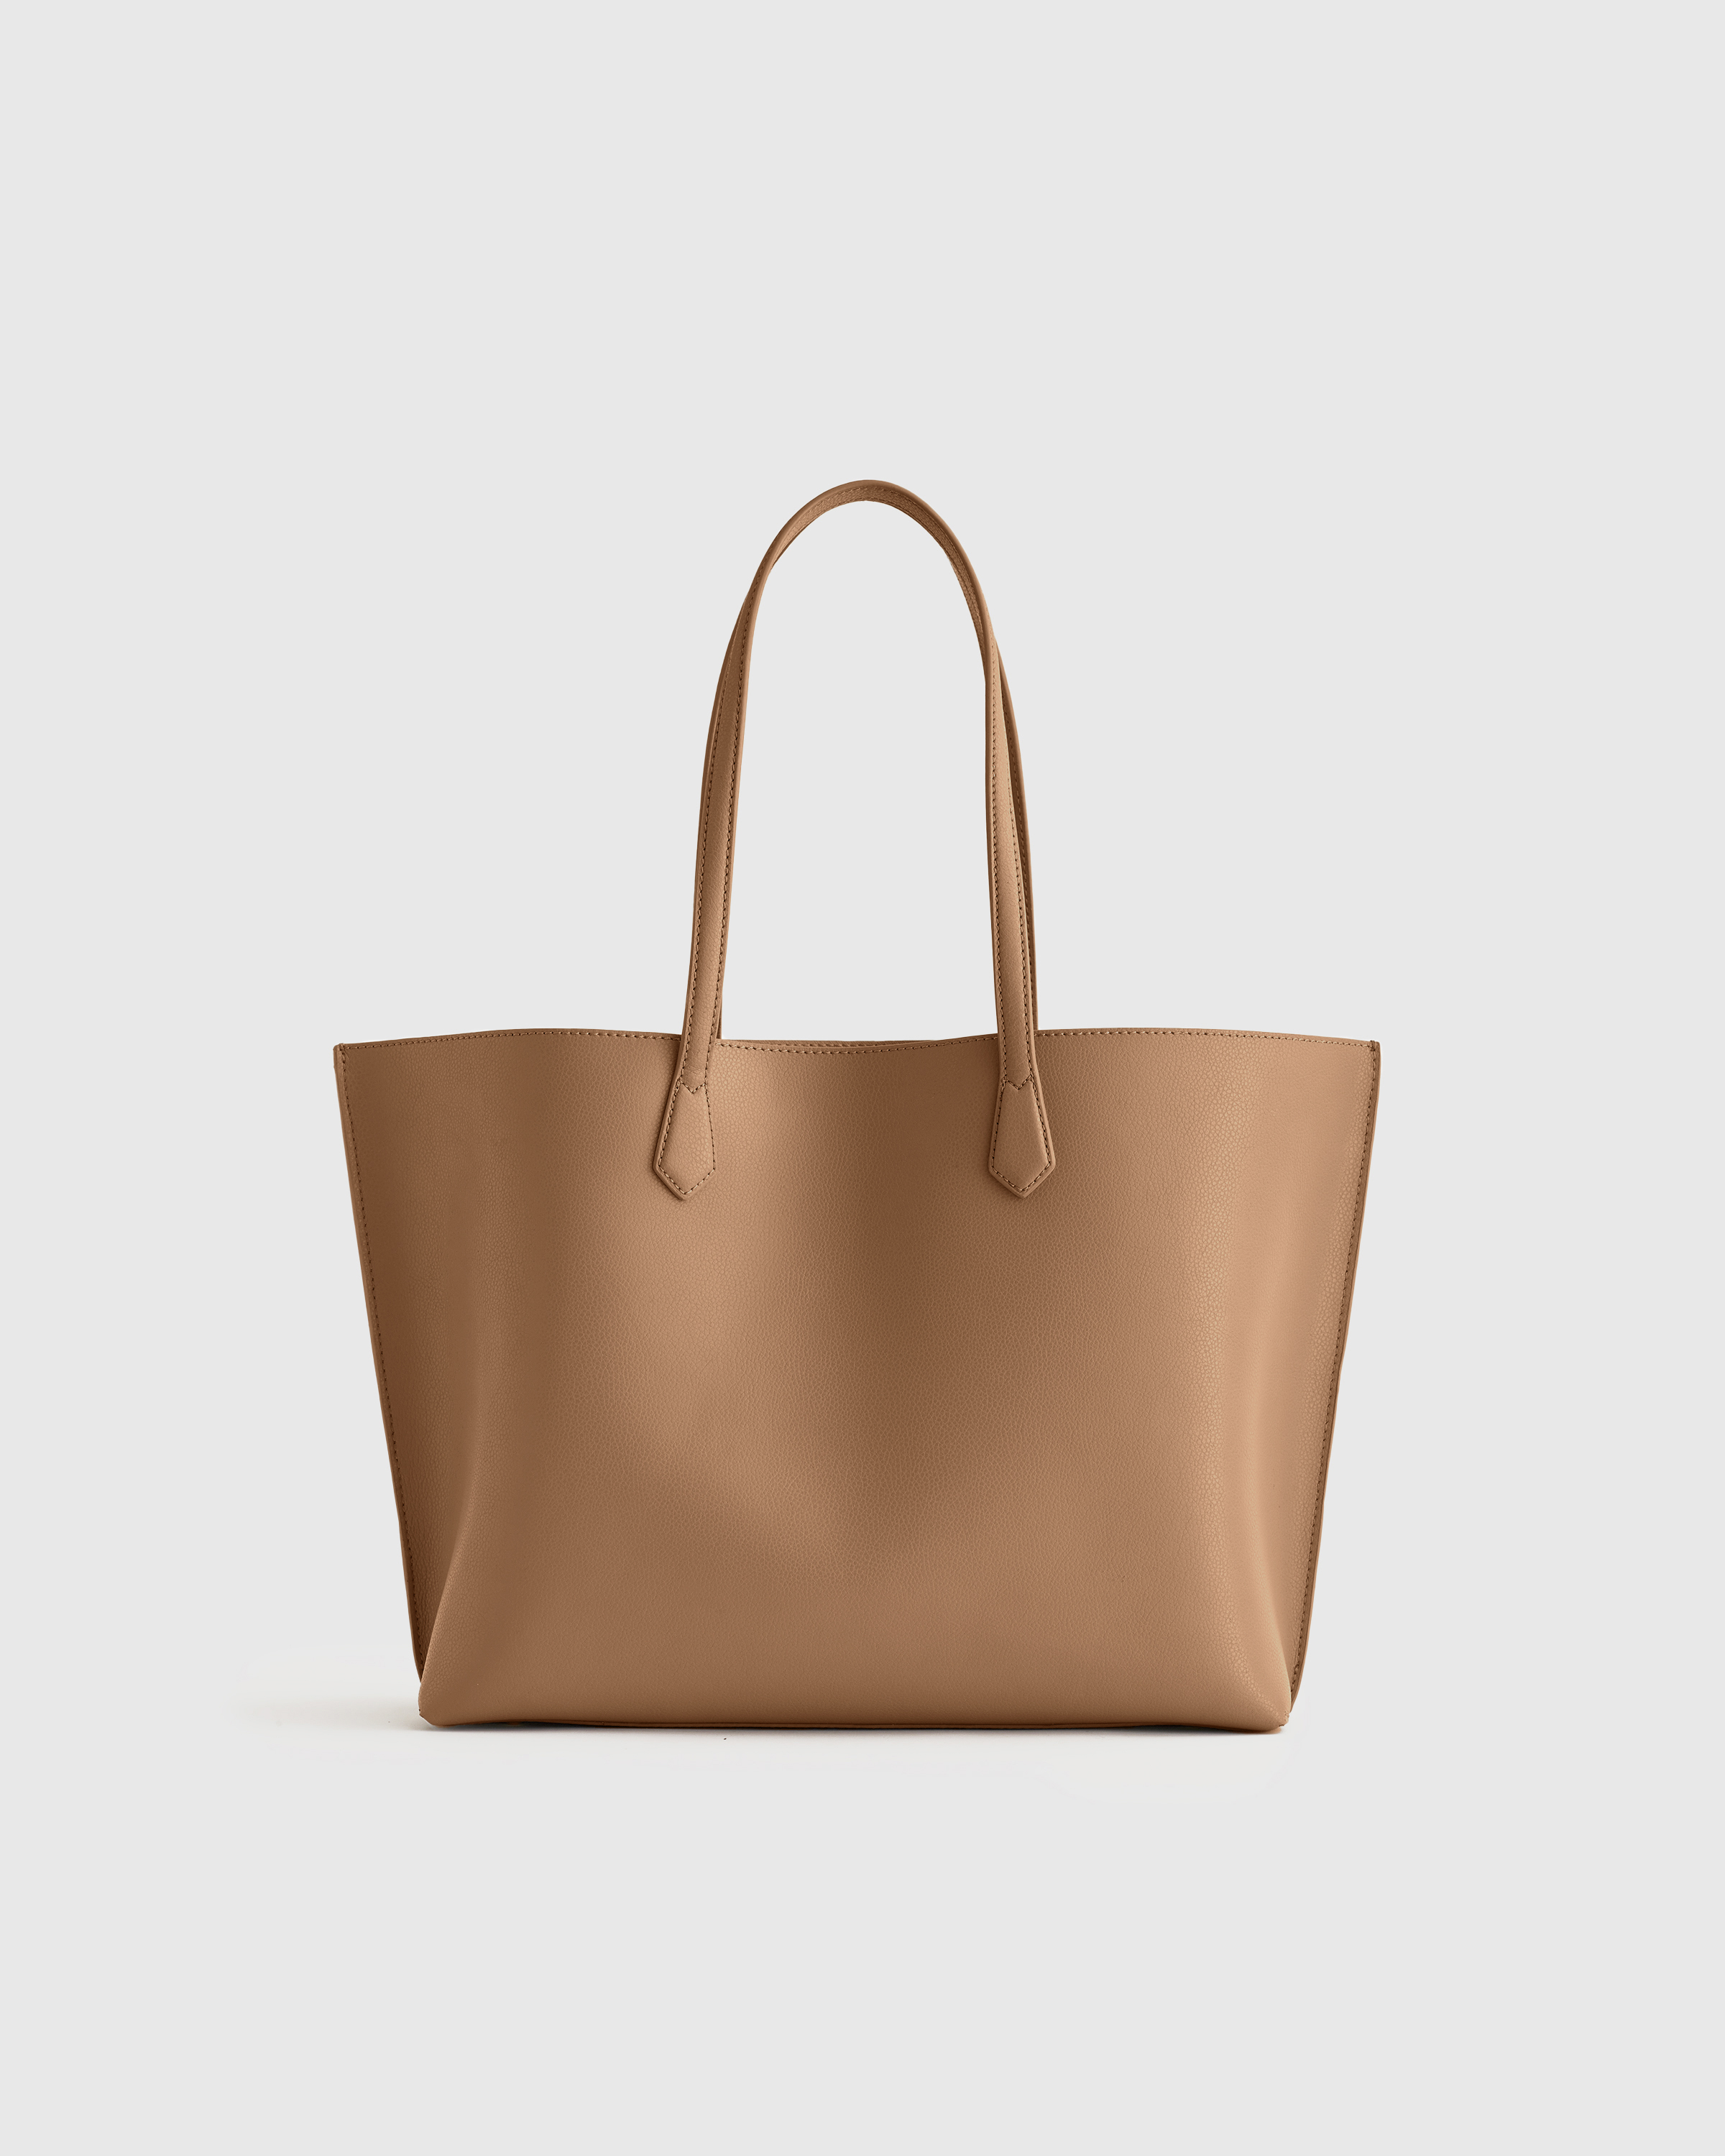 NWT LV Bag Shopping Purse Tote Handbag 1 Shoulder Dust Cover